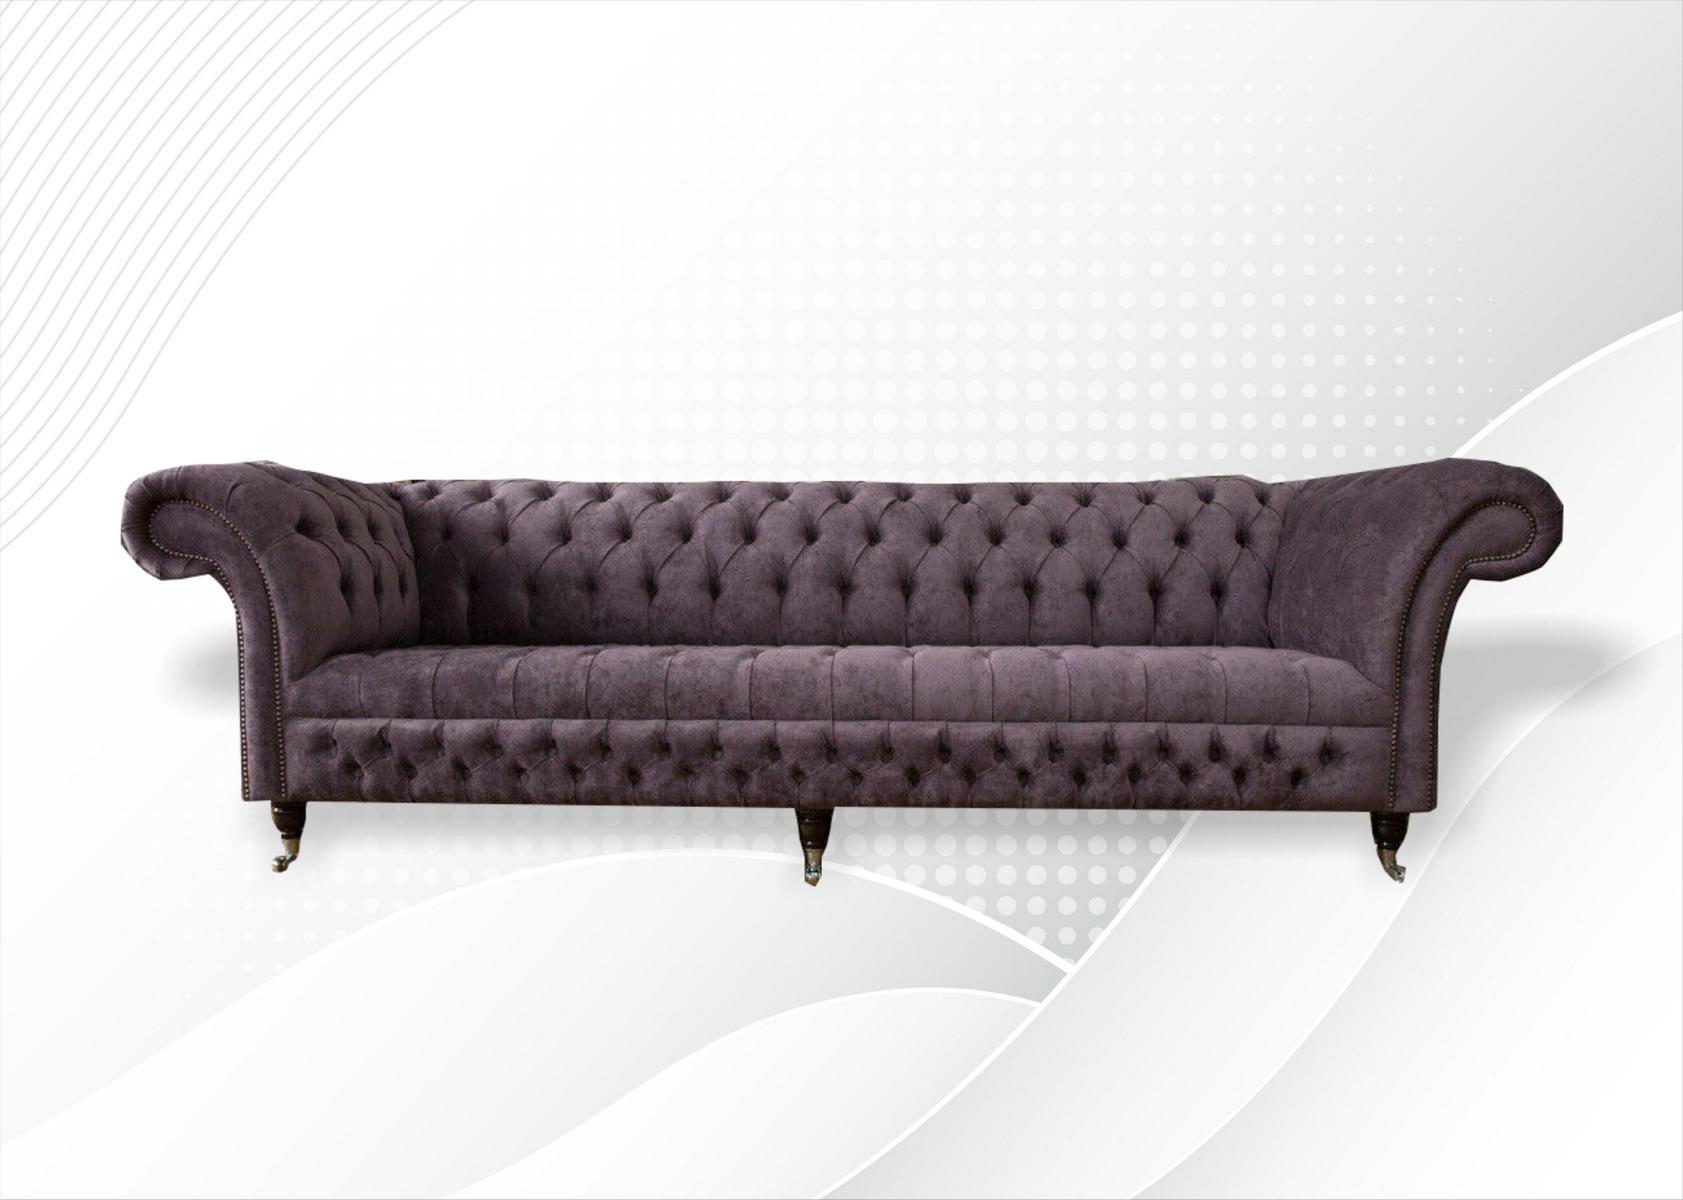 xxl Big Sofa Couch Chesterfield 265cm Polster Sofas 4 Sitzer Leder Textil